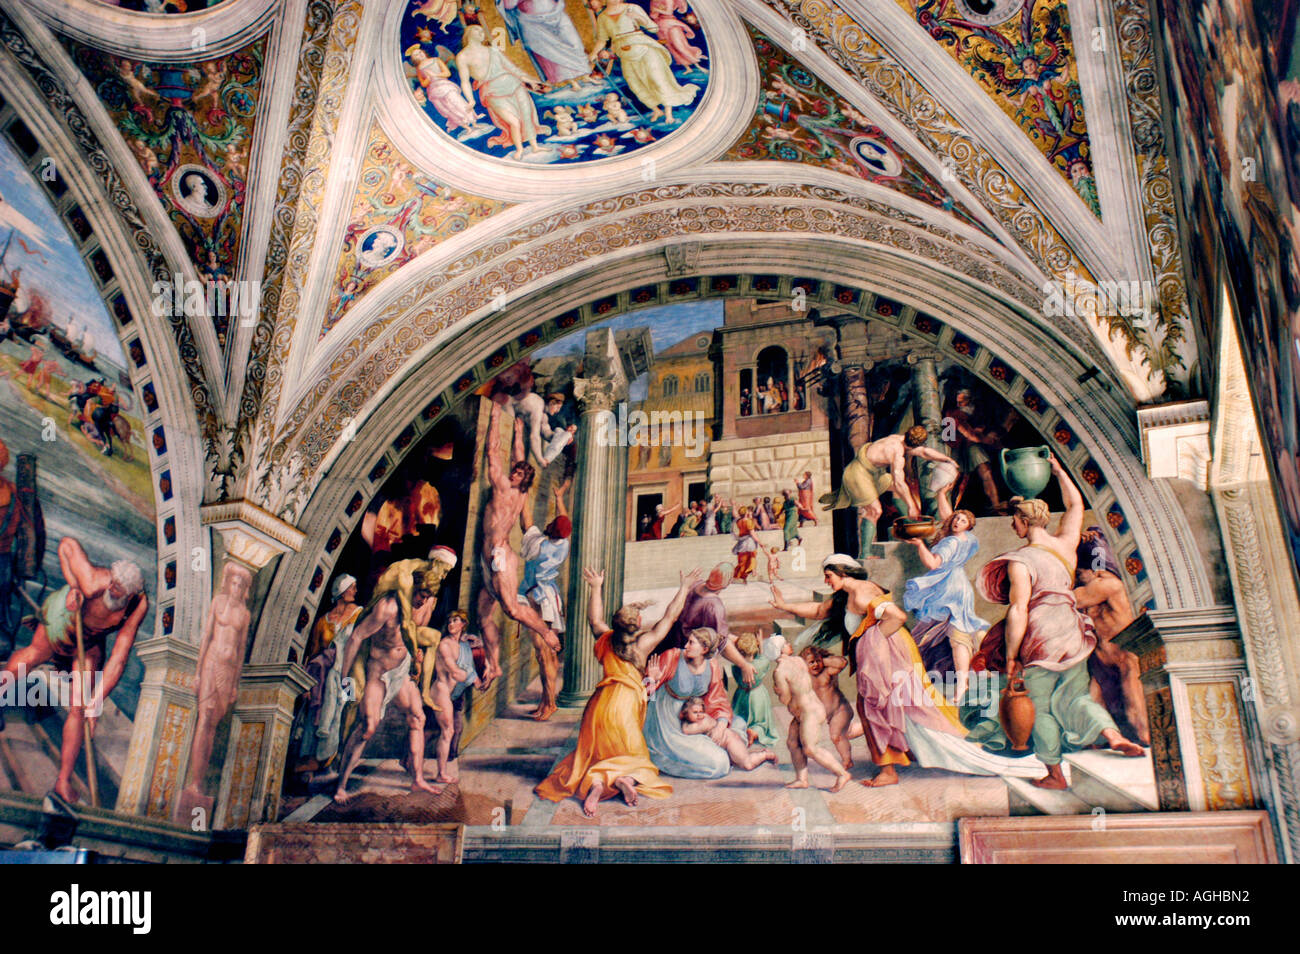 Fresco-Malerei, Vatikan Museum, Vatikan, Rom, Italien Stockfotografie -  Alamy